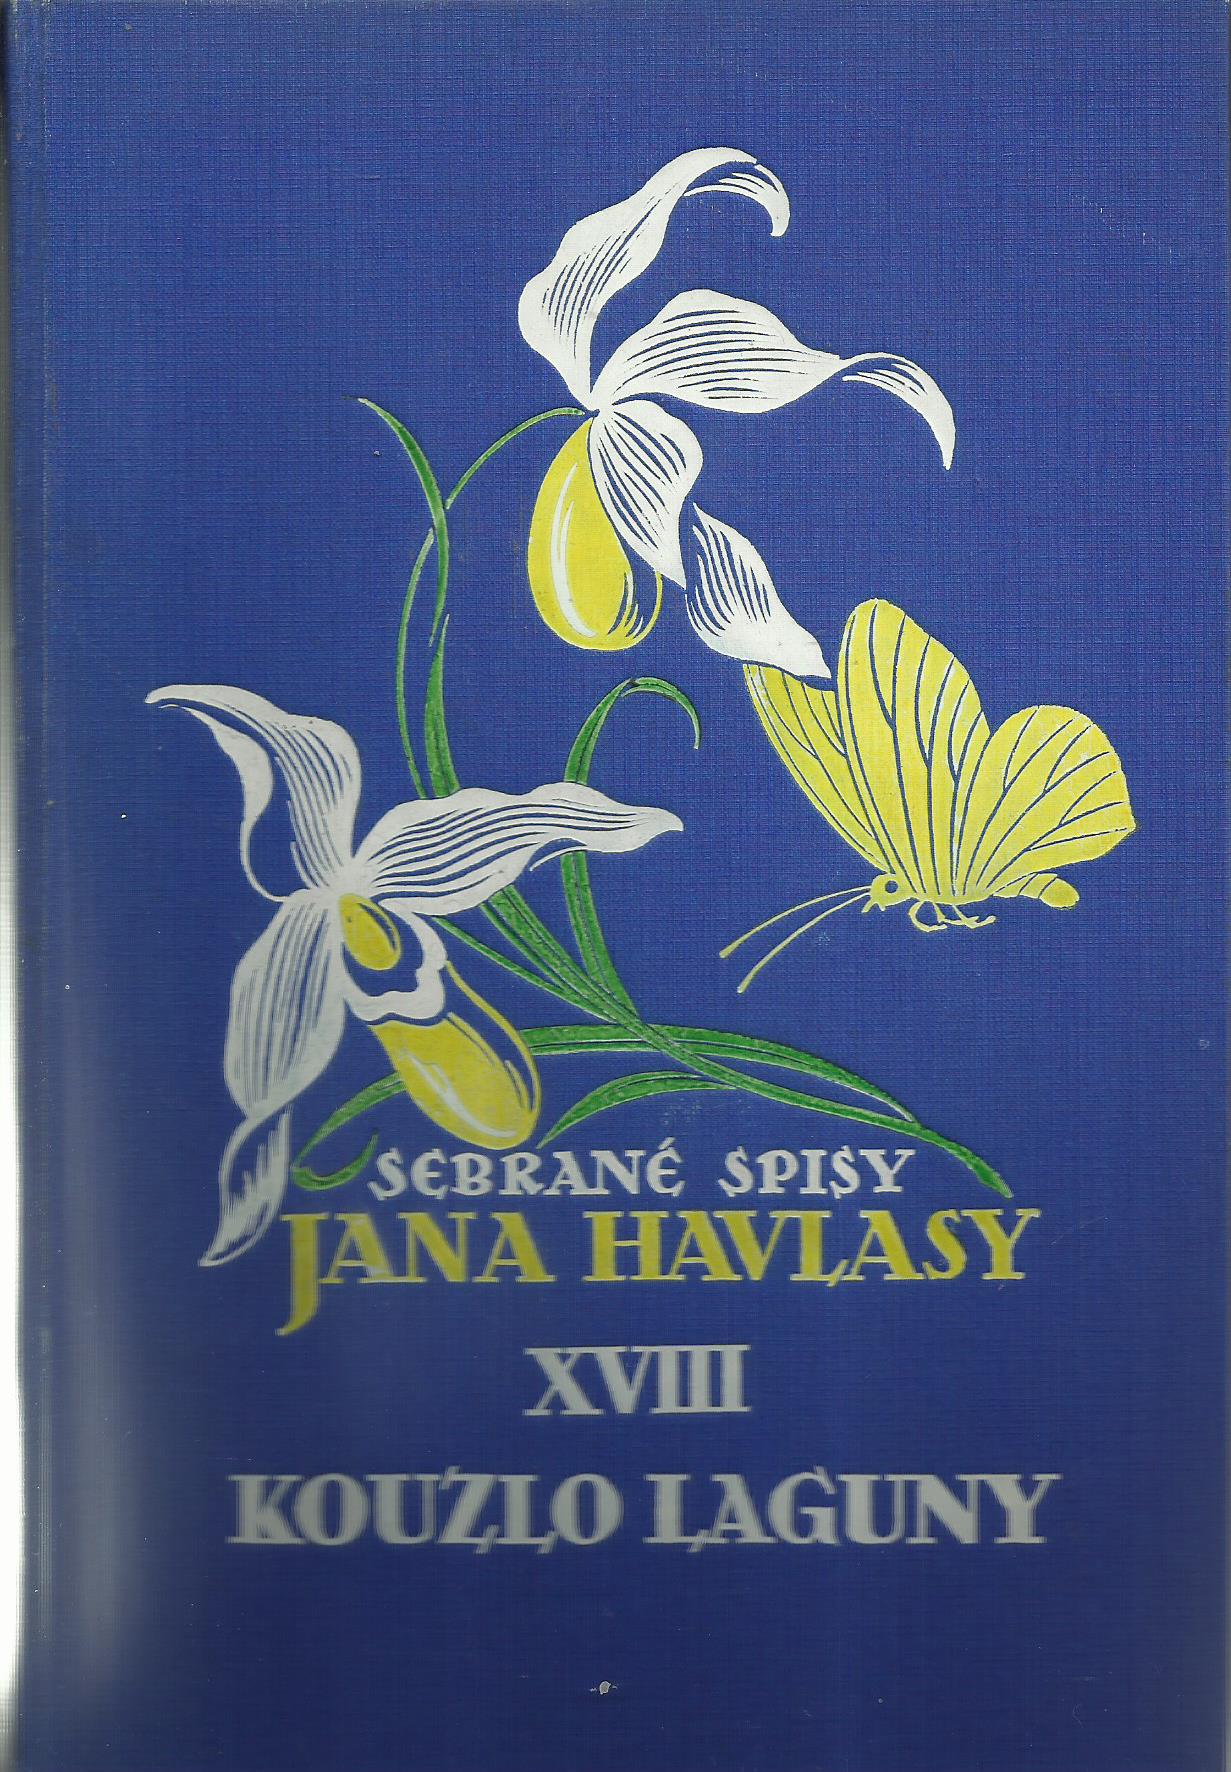 Sebrané spisy Jana Hlavase XVIII - Kouzlo laguny